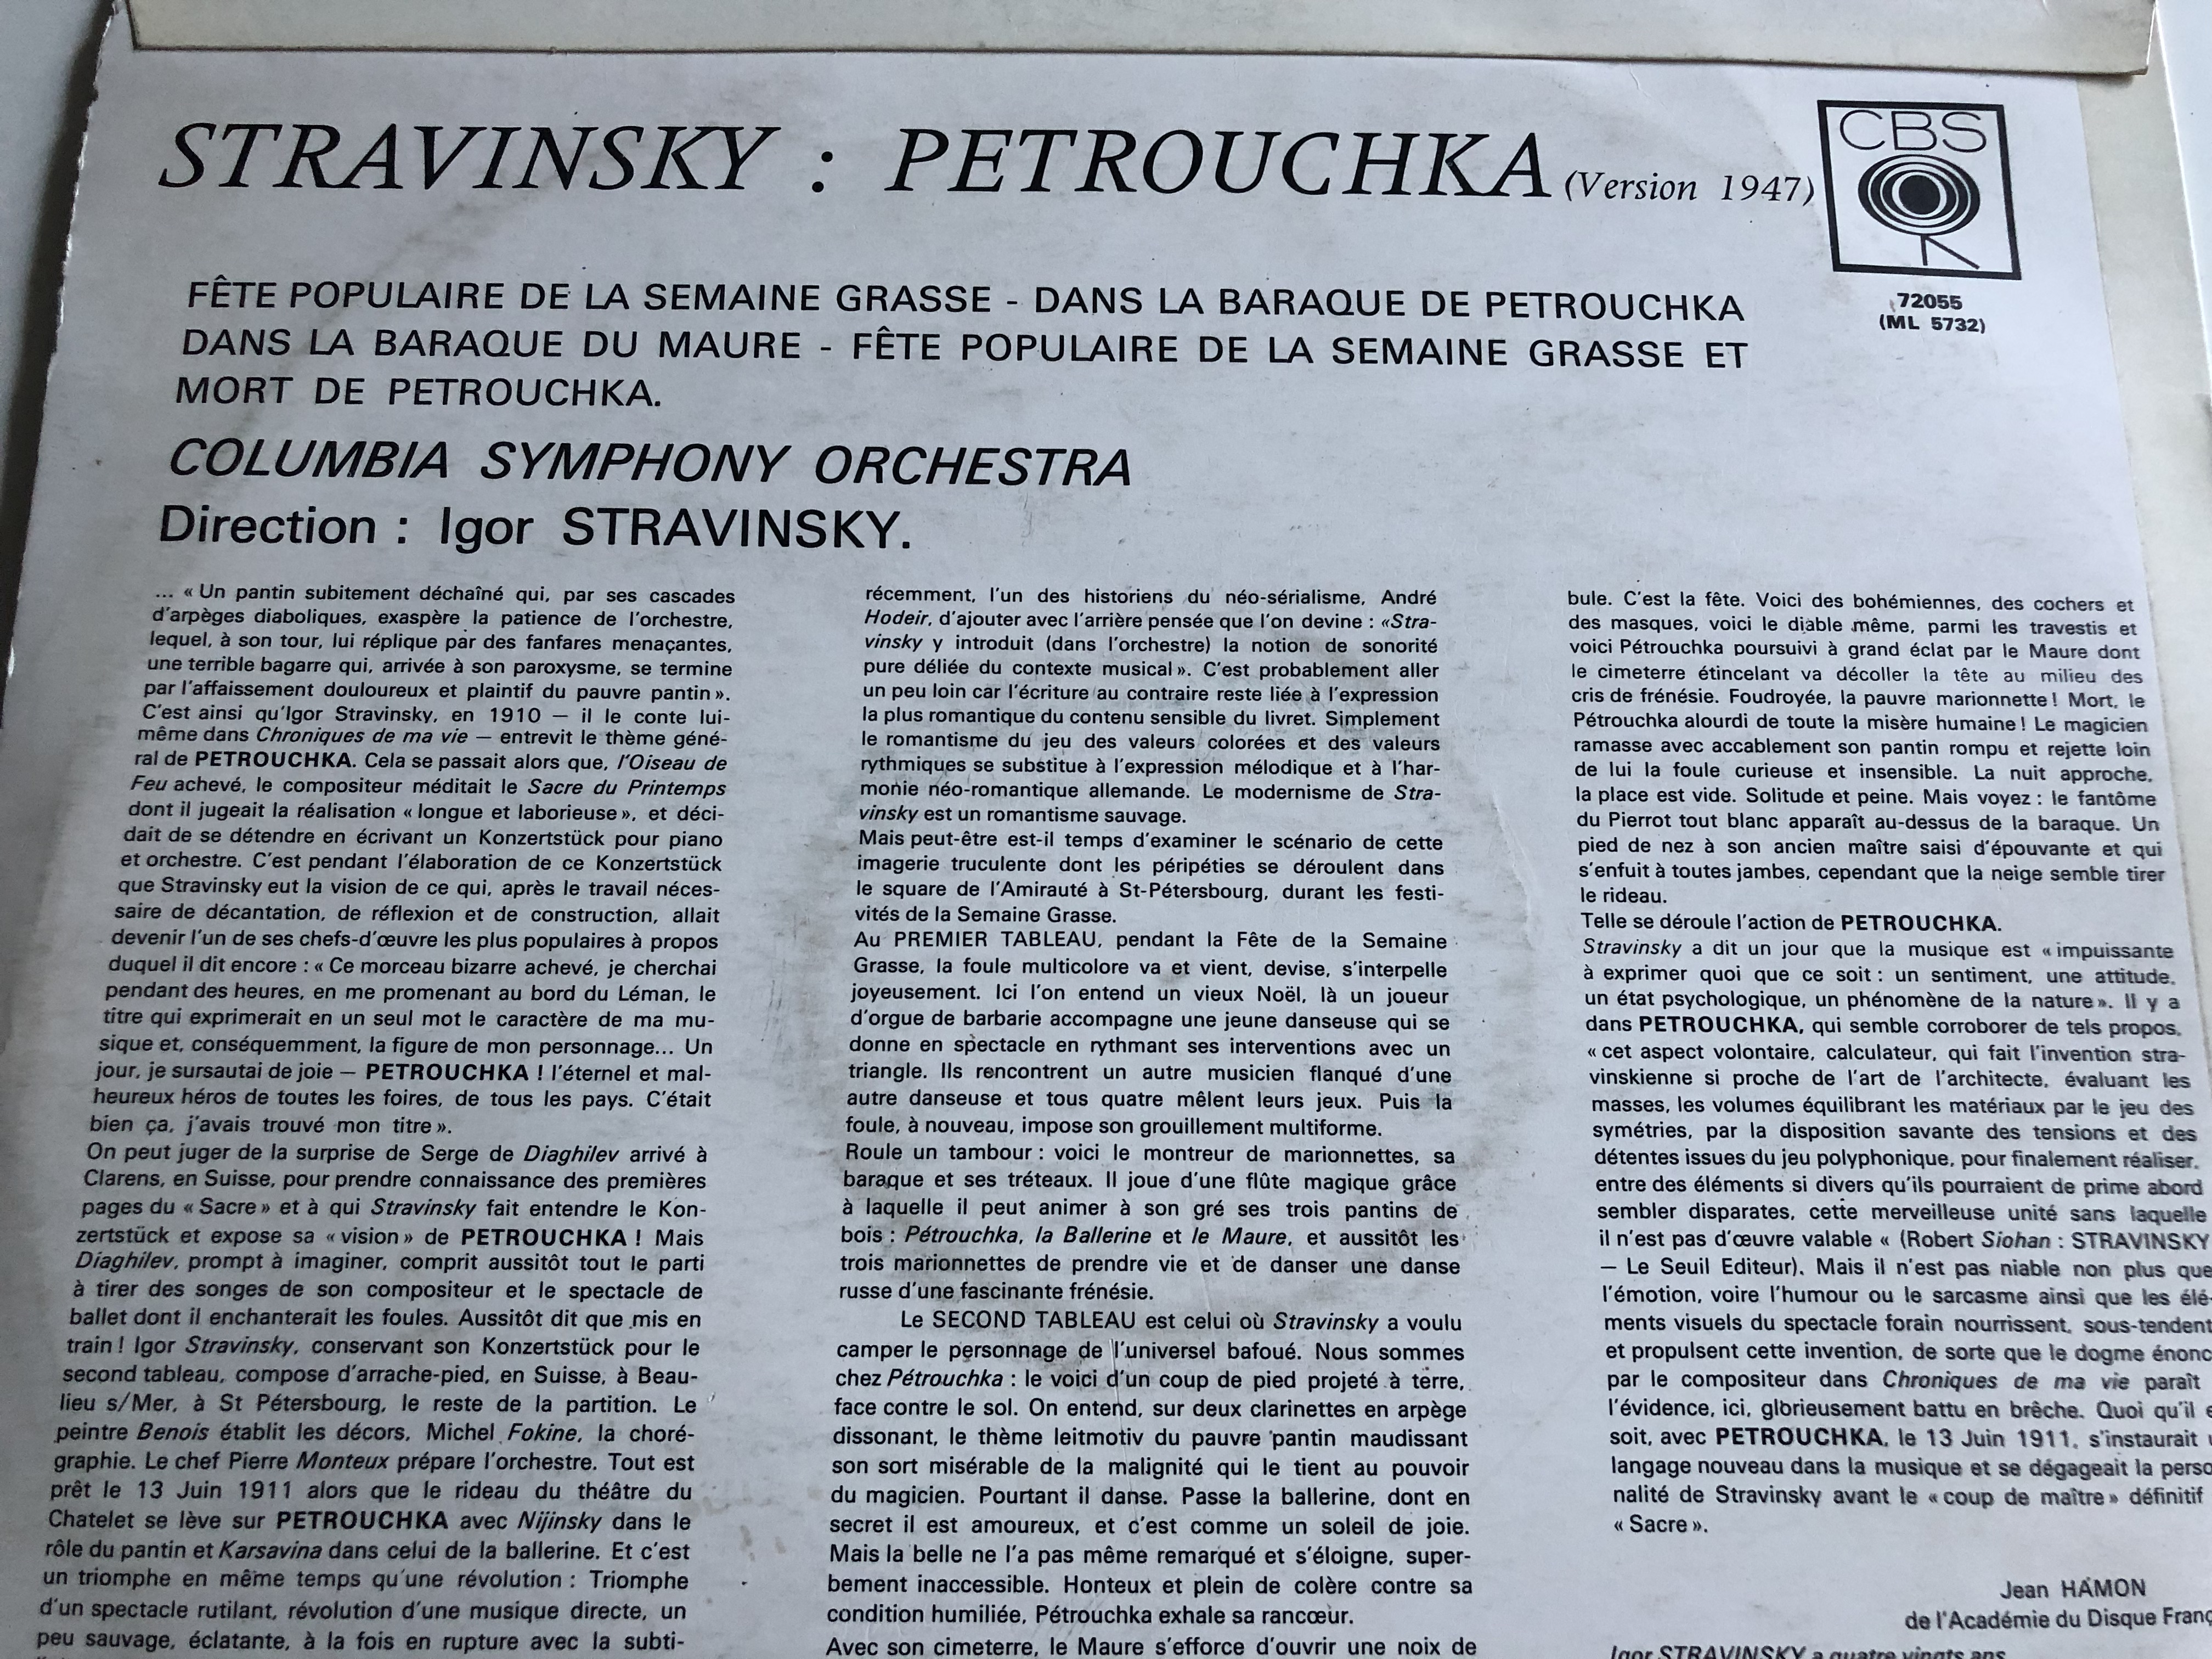 stravinsky-petrouchka-columbia-symphony-orchestra-conducted-igor-stravinsky-version-1947-cbs-lp-72055-4-.jpg